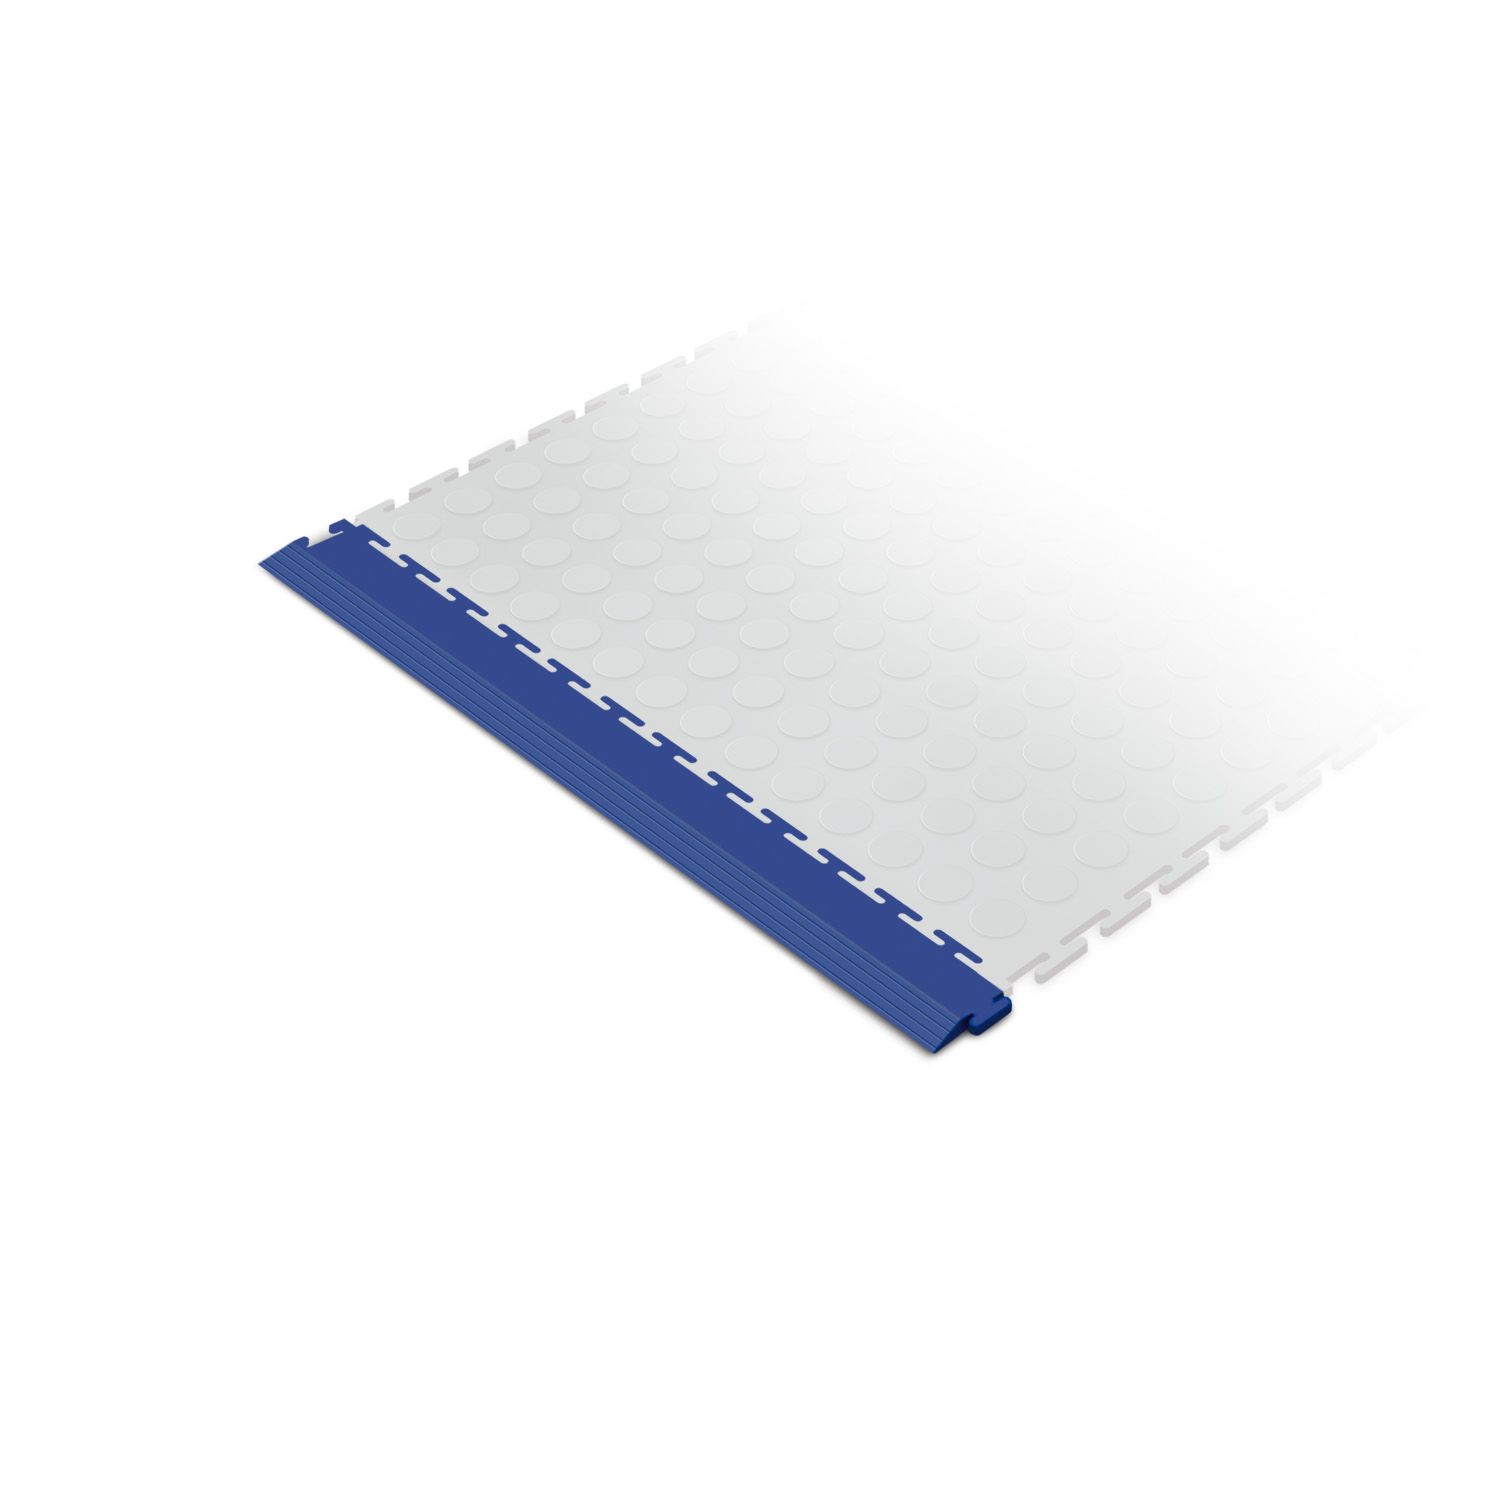 Heavy-duty edge ramp tile (blue)